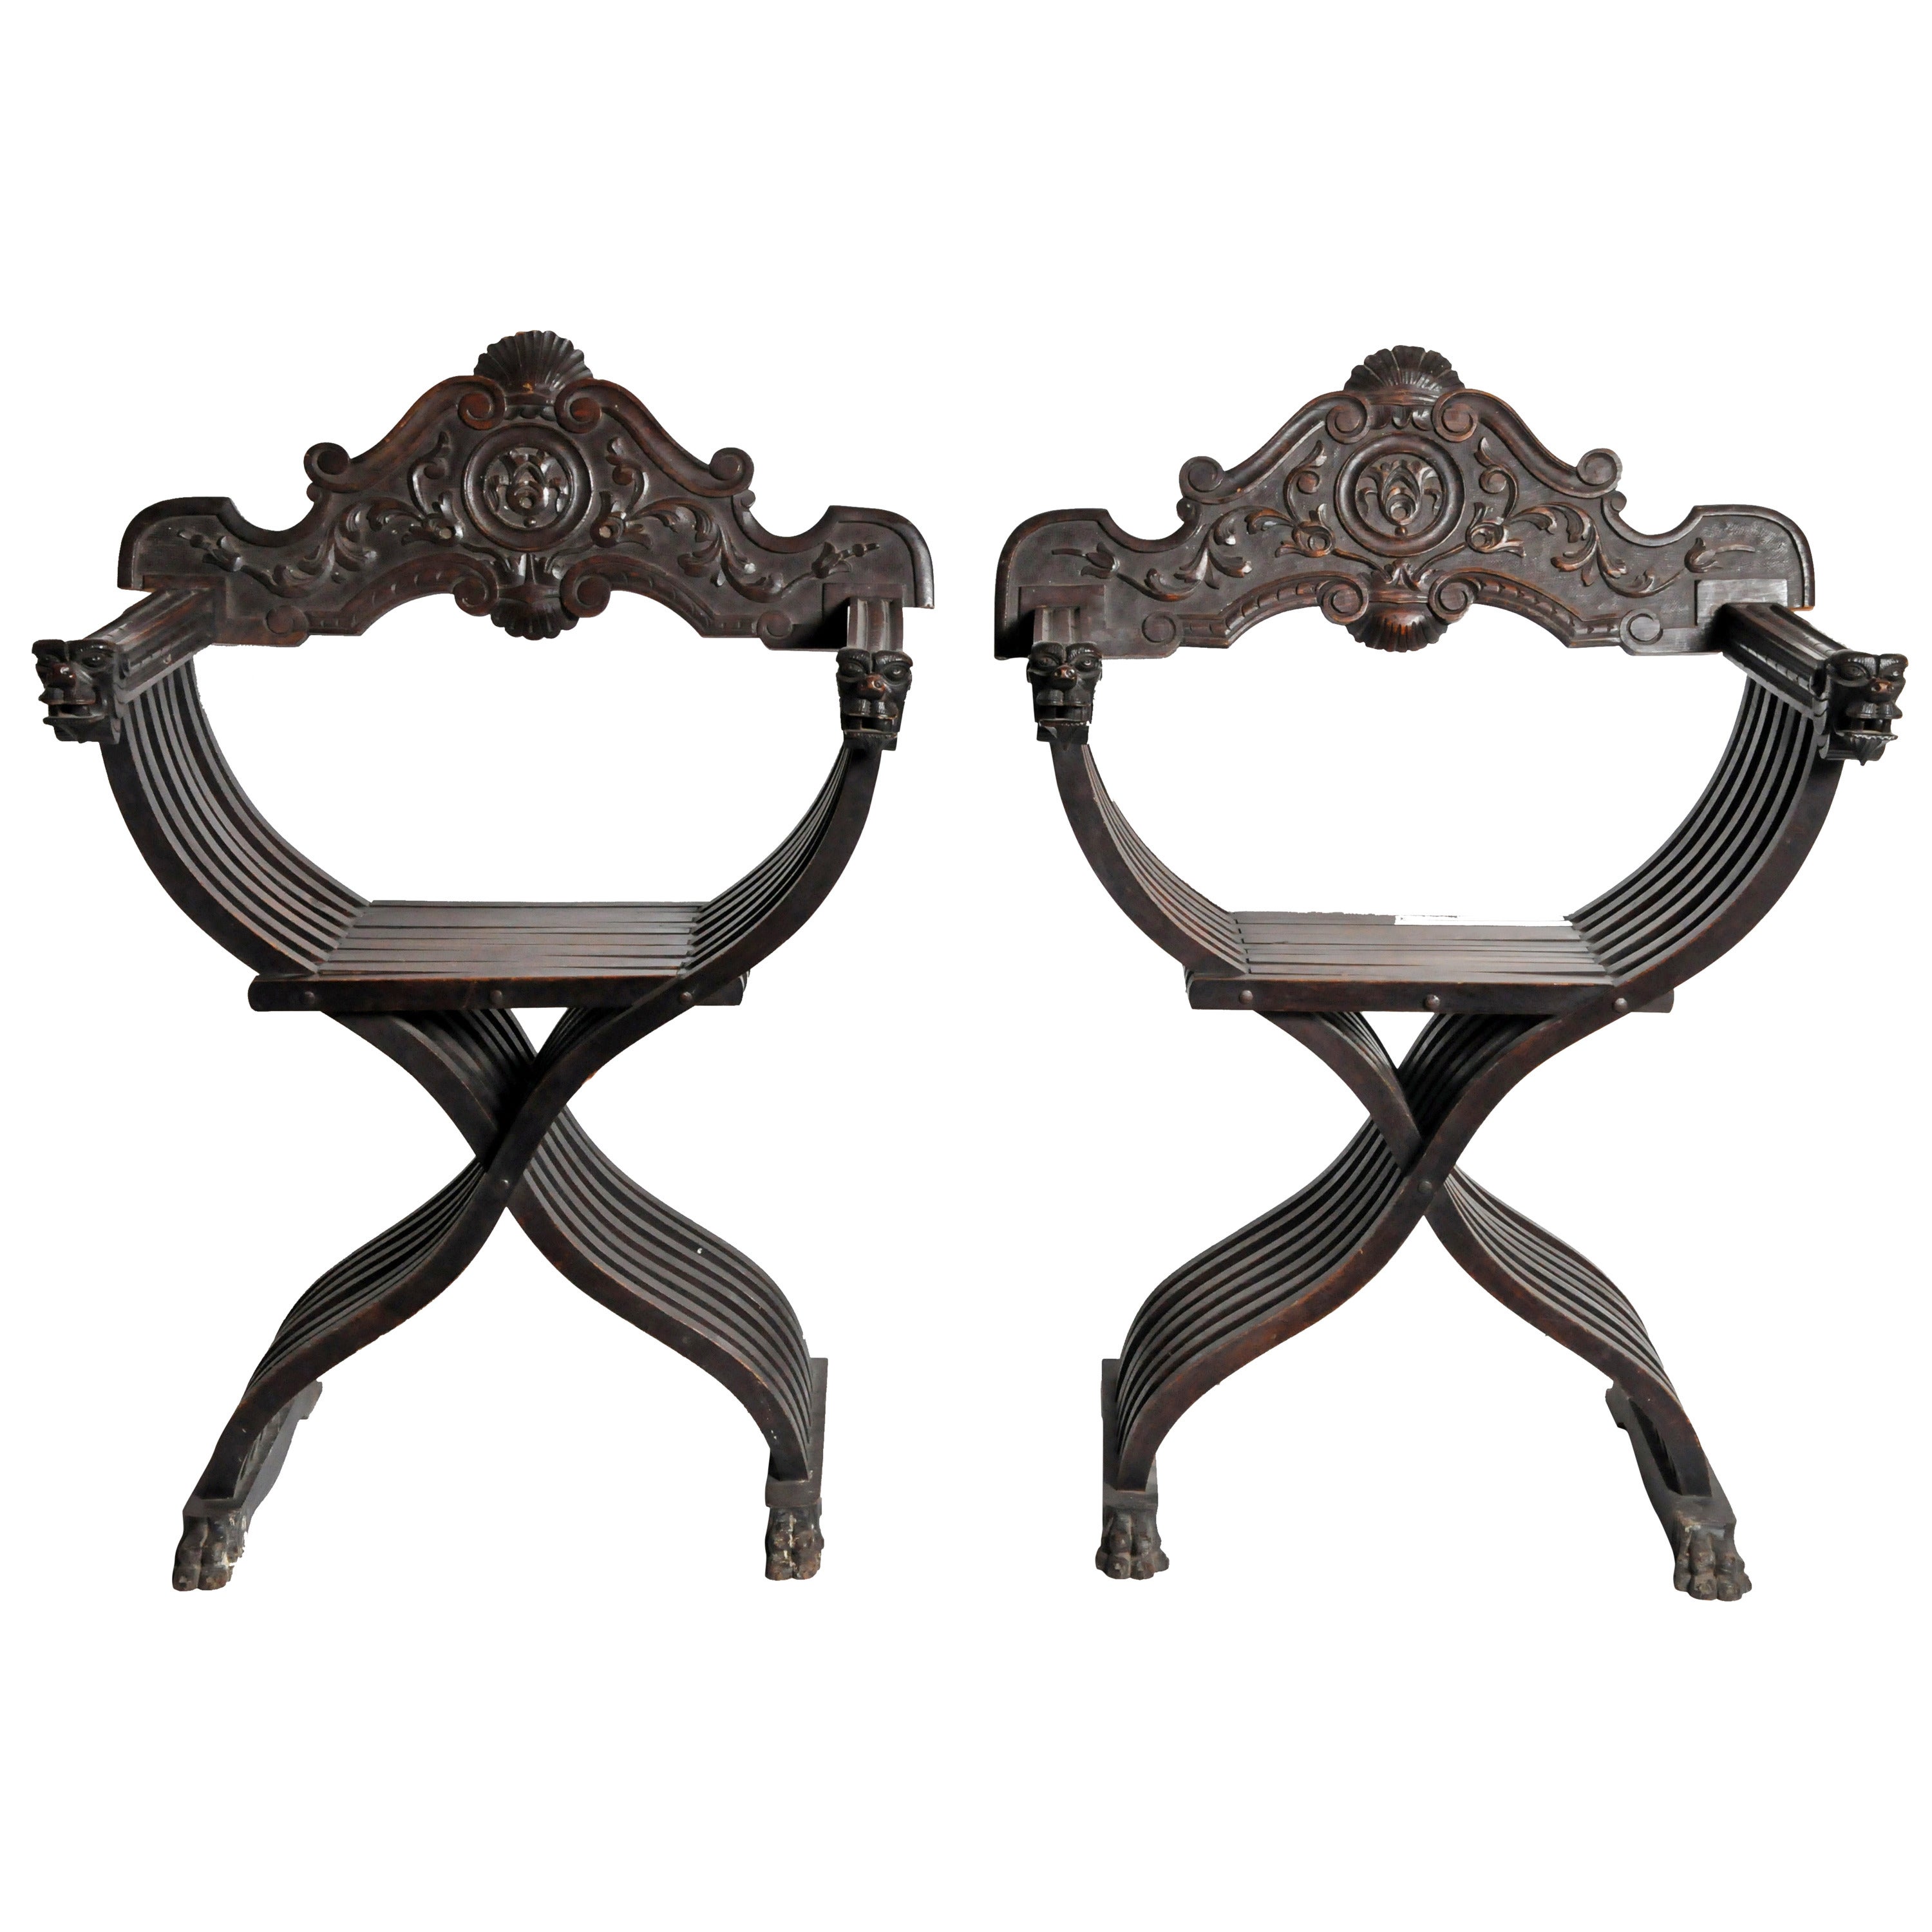 Pair of Italian Renaissance-Style Savonarola Chairs